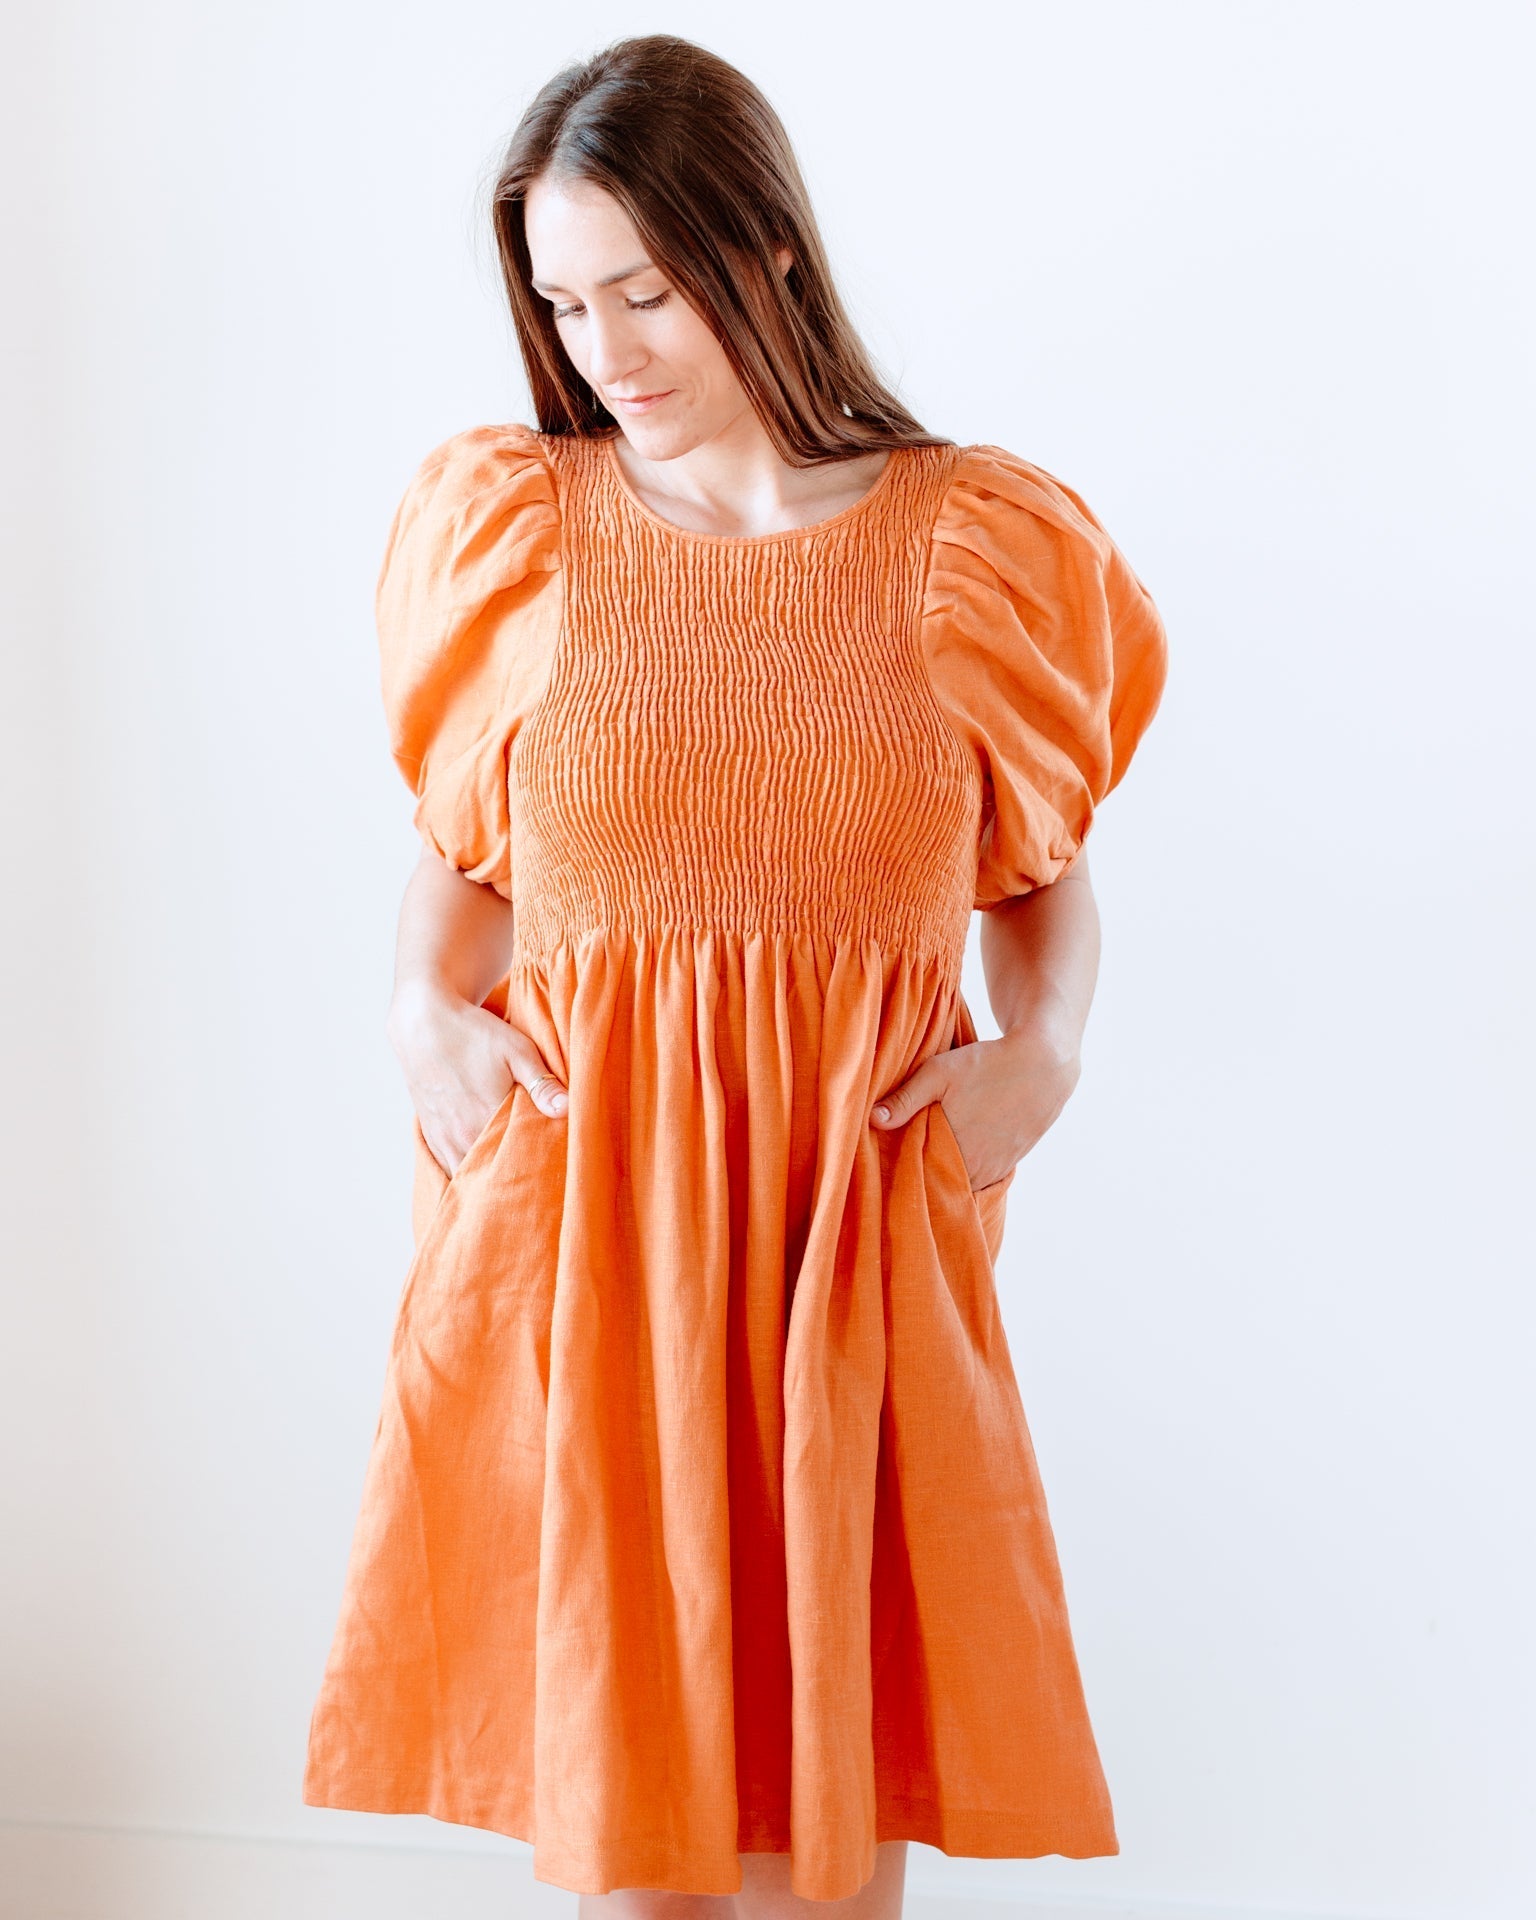 orange linen dress